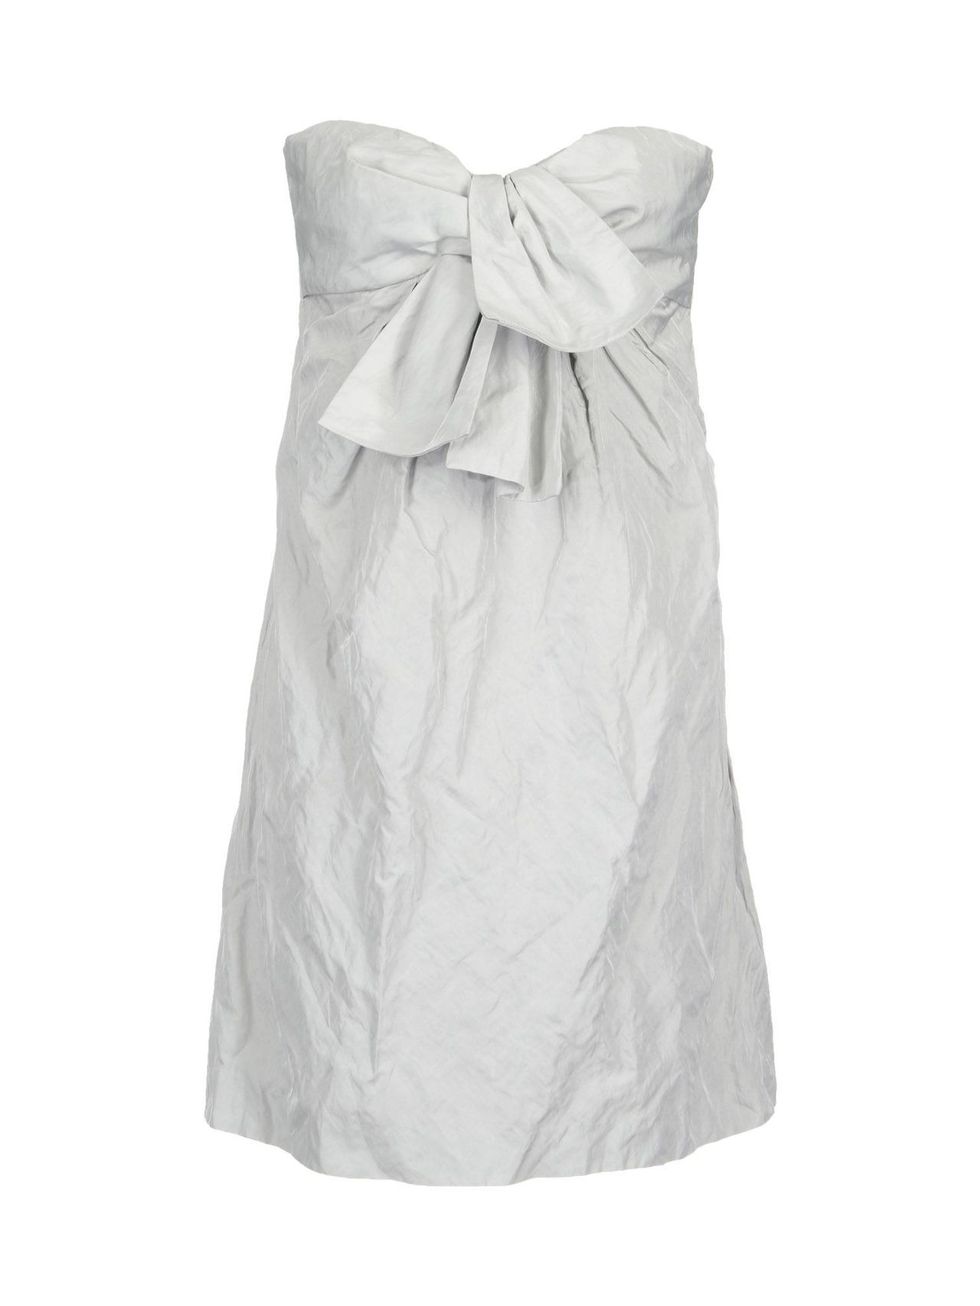 White, Dress, One-piece garment, Day dress, Grey, Fashion design, Embellishment, Pattern, Silver, Ruffle, 